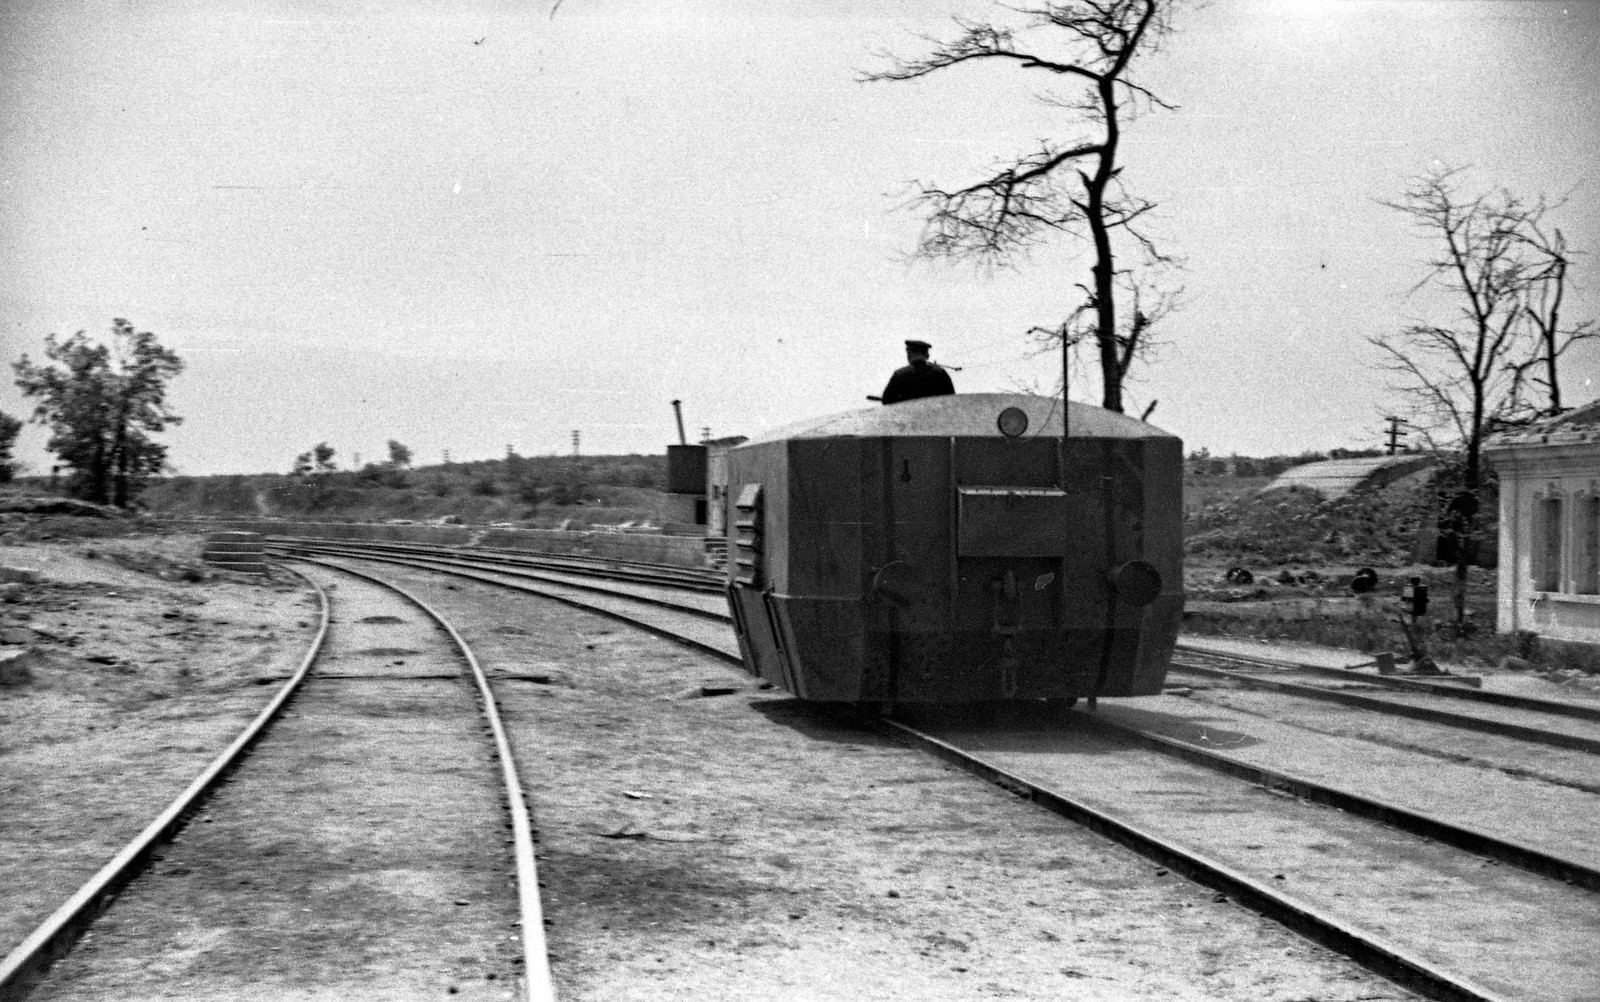 WW2 Rail-road armor : railcars and railcruisers